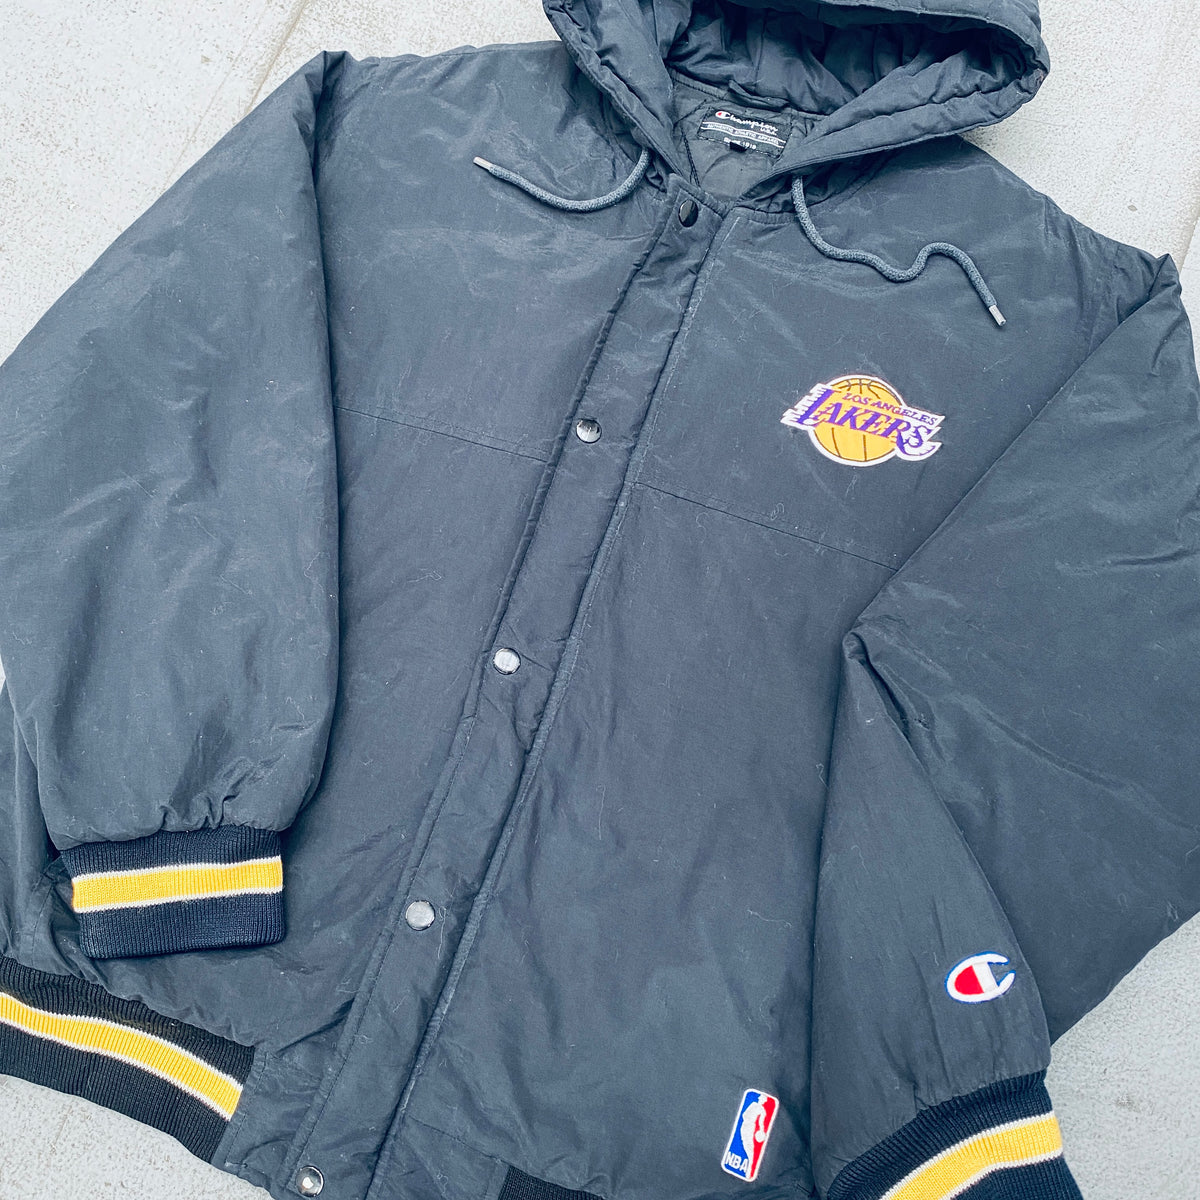 Los Angeles Lakers: 1990's Champion Blackout Fullzip Parka Jacket